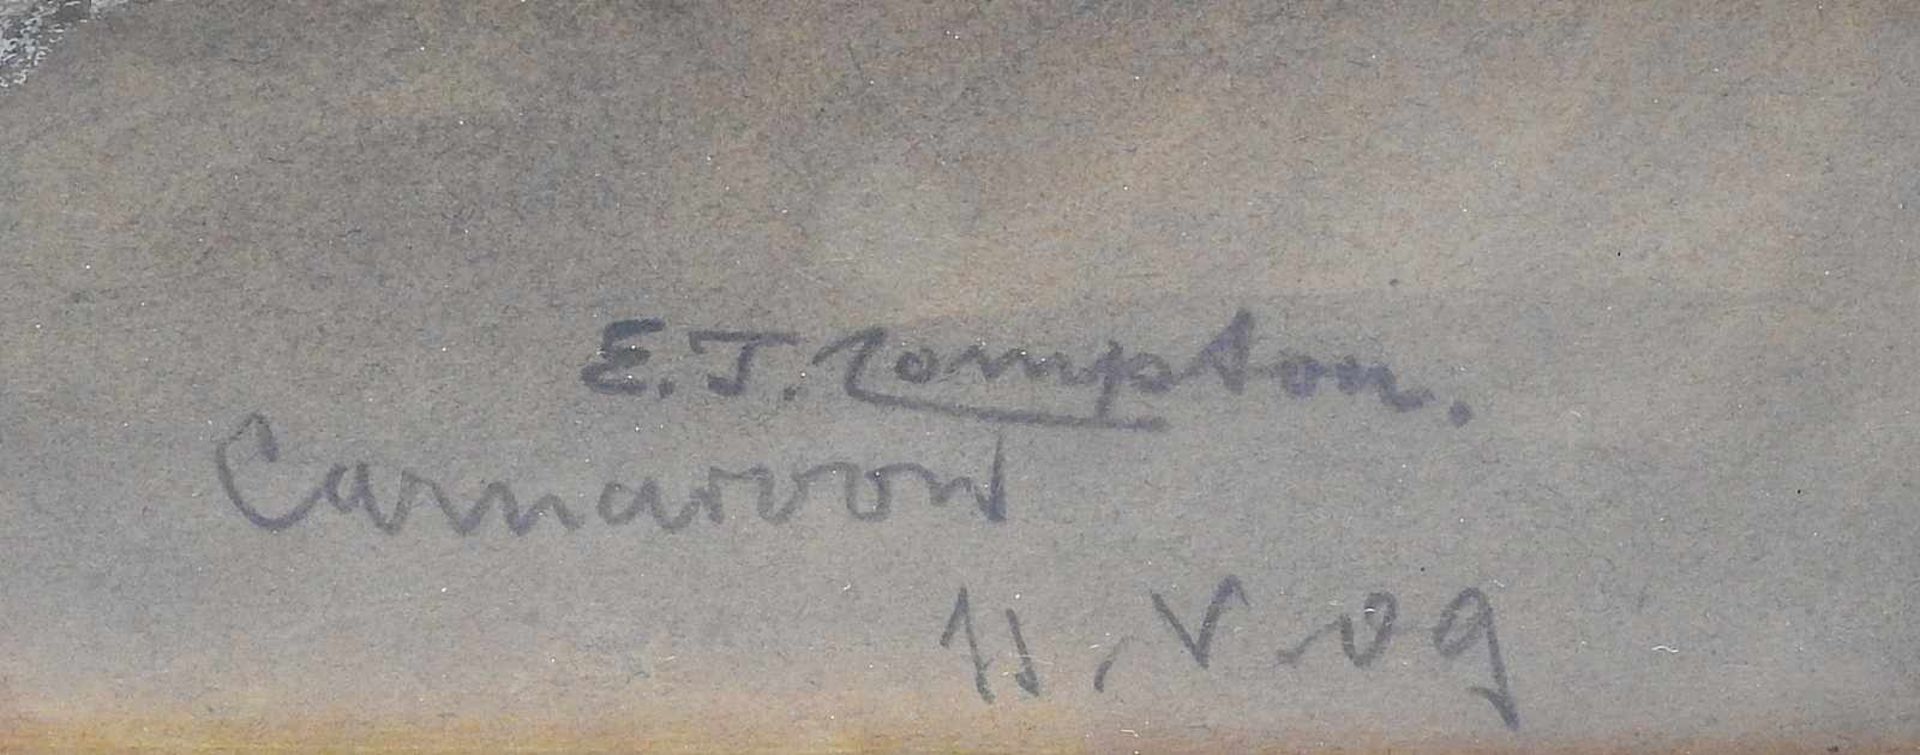 Edward Theodore Compton, 1849 Stohe Newington - 1921 FeldafingAquarell/Bleistift/gefärbtes Papier. - Bild 5 aus 5